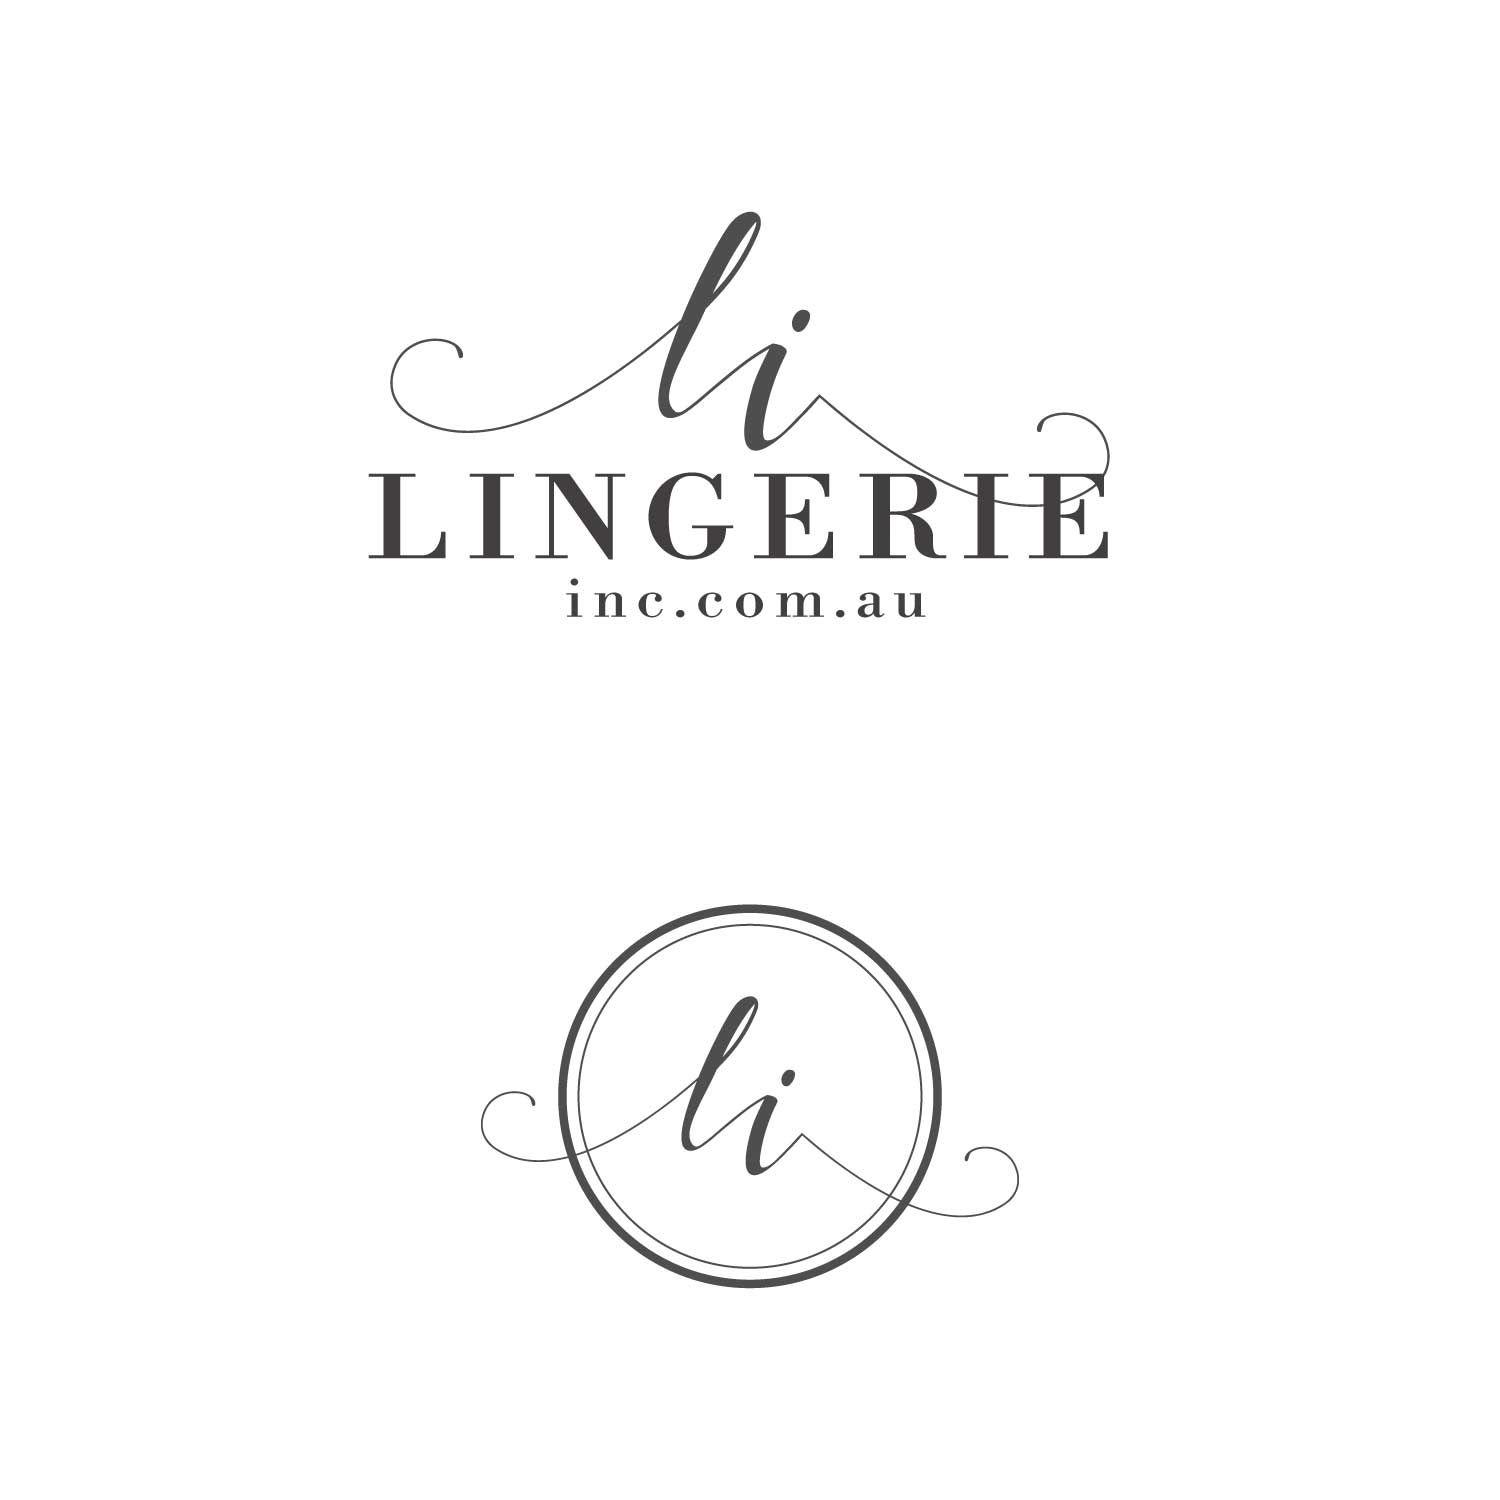 Lingerie Logo - Adult Logo Design for Lingerie Inc by ipadipad | Design #18104910